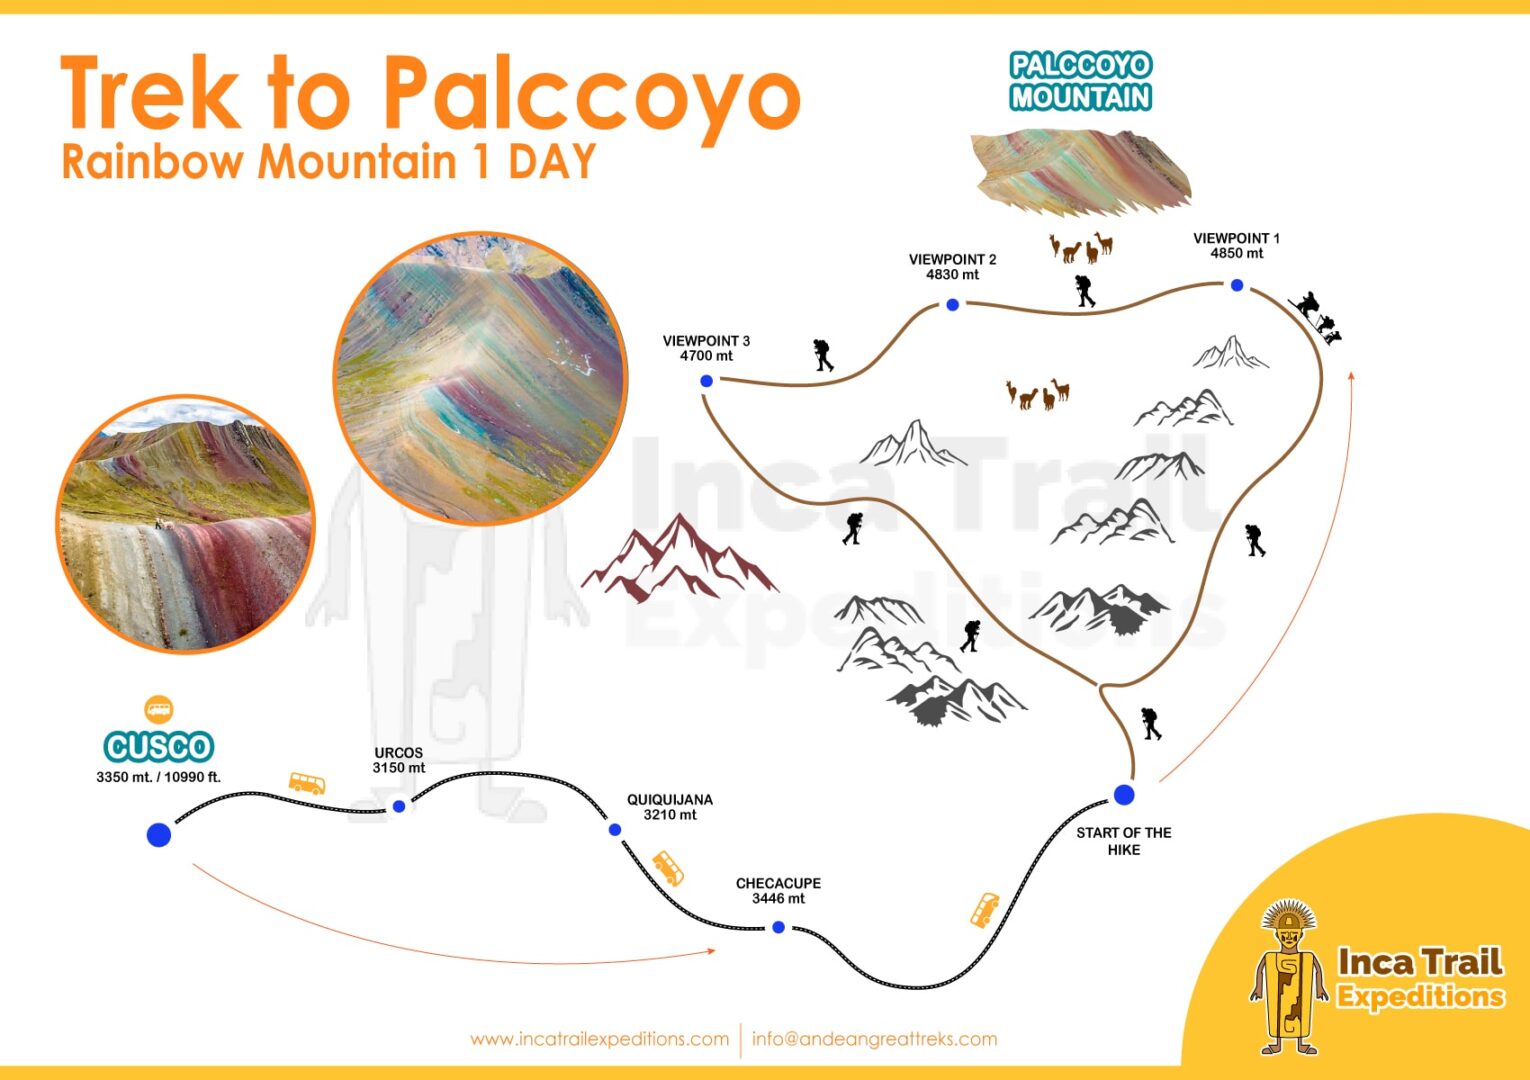 Palcoyo Rainbow Mountain 1 Day